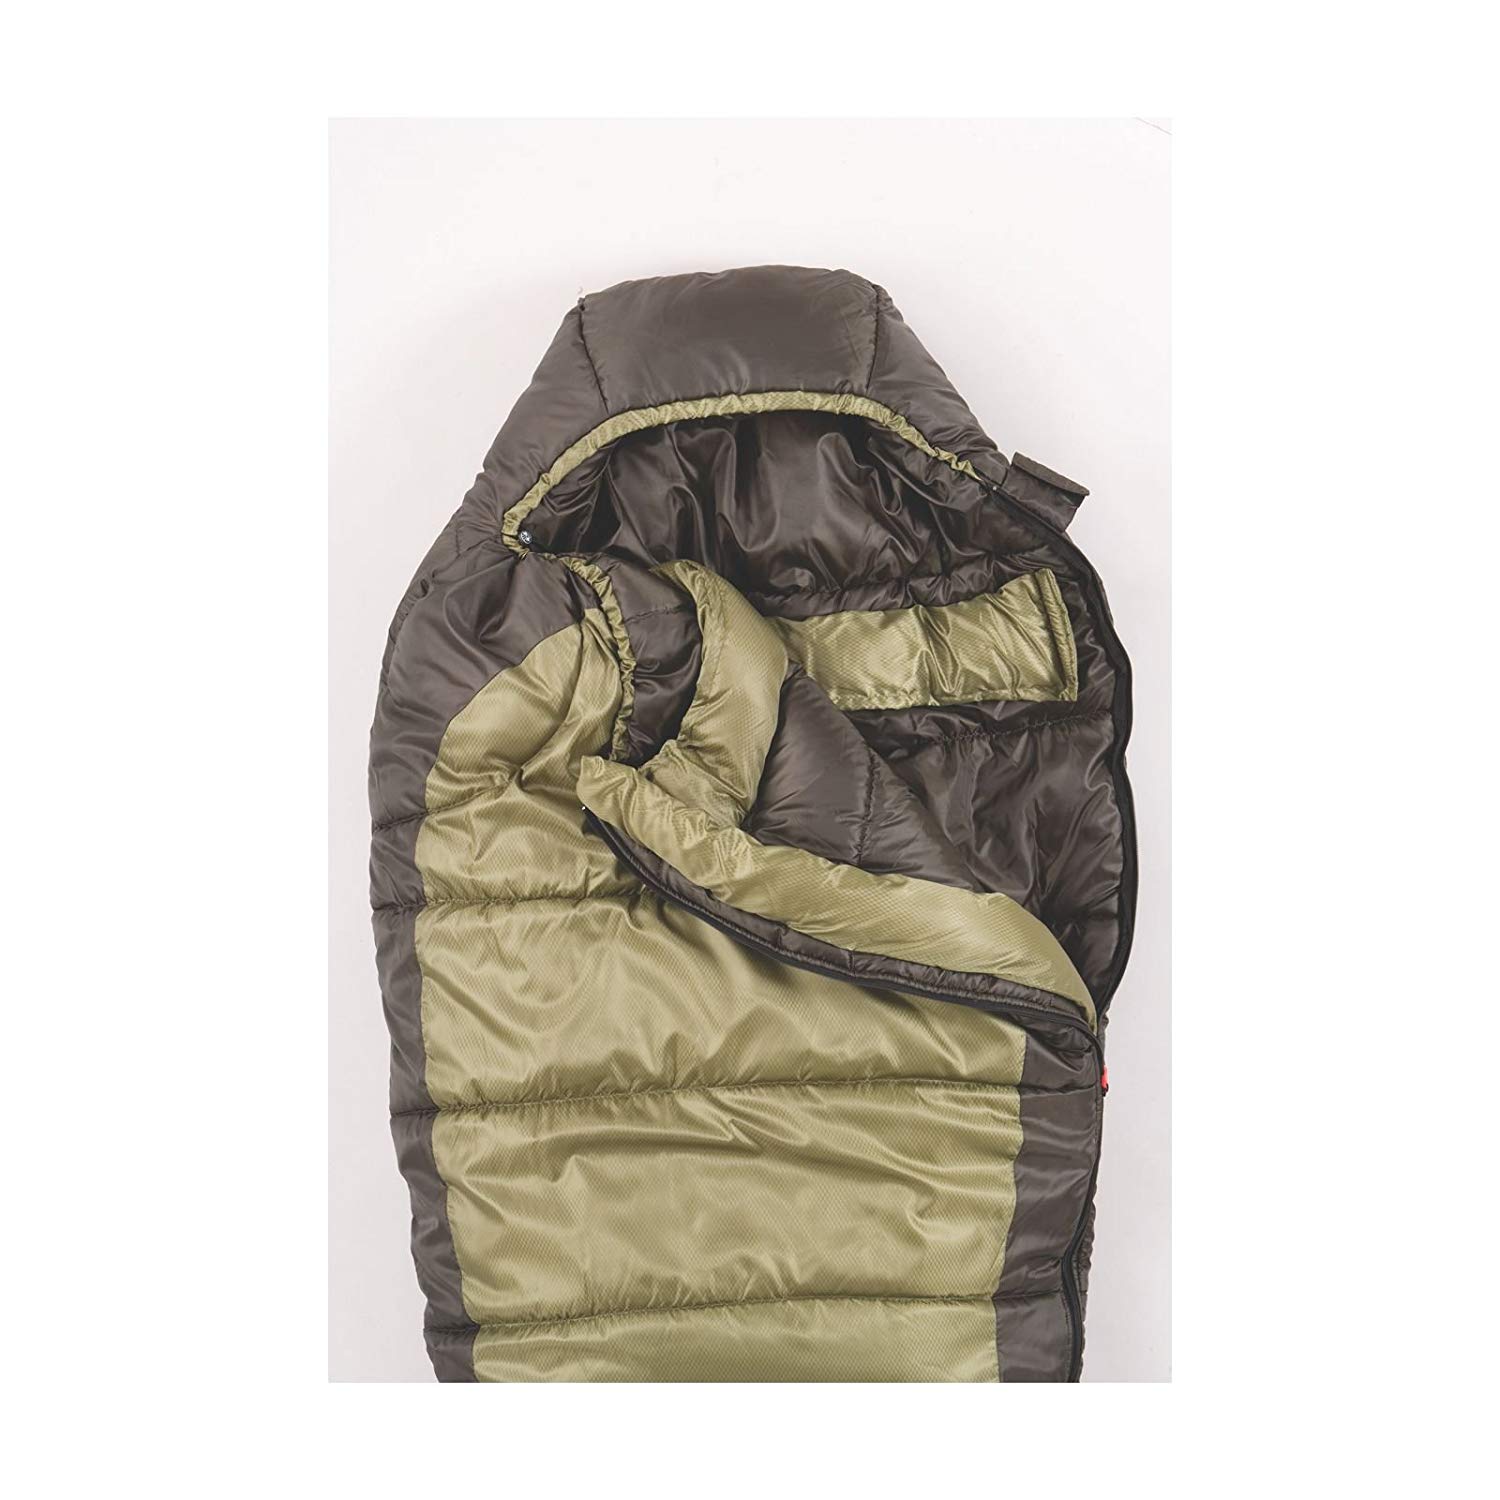 AIOIAI Adult Mummy Sleeping Bag 